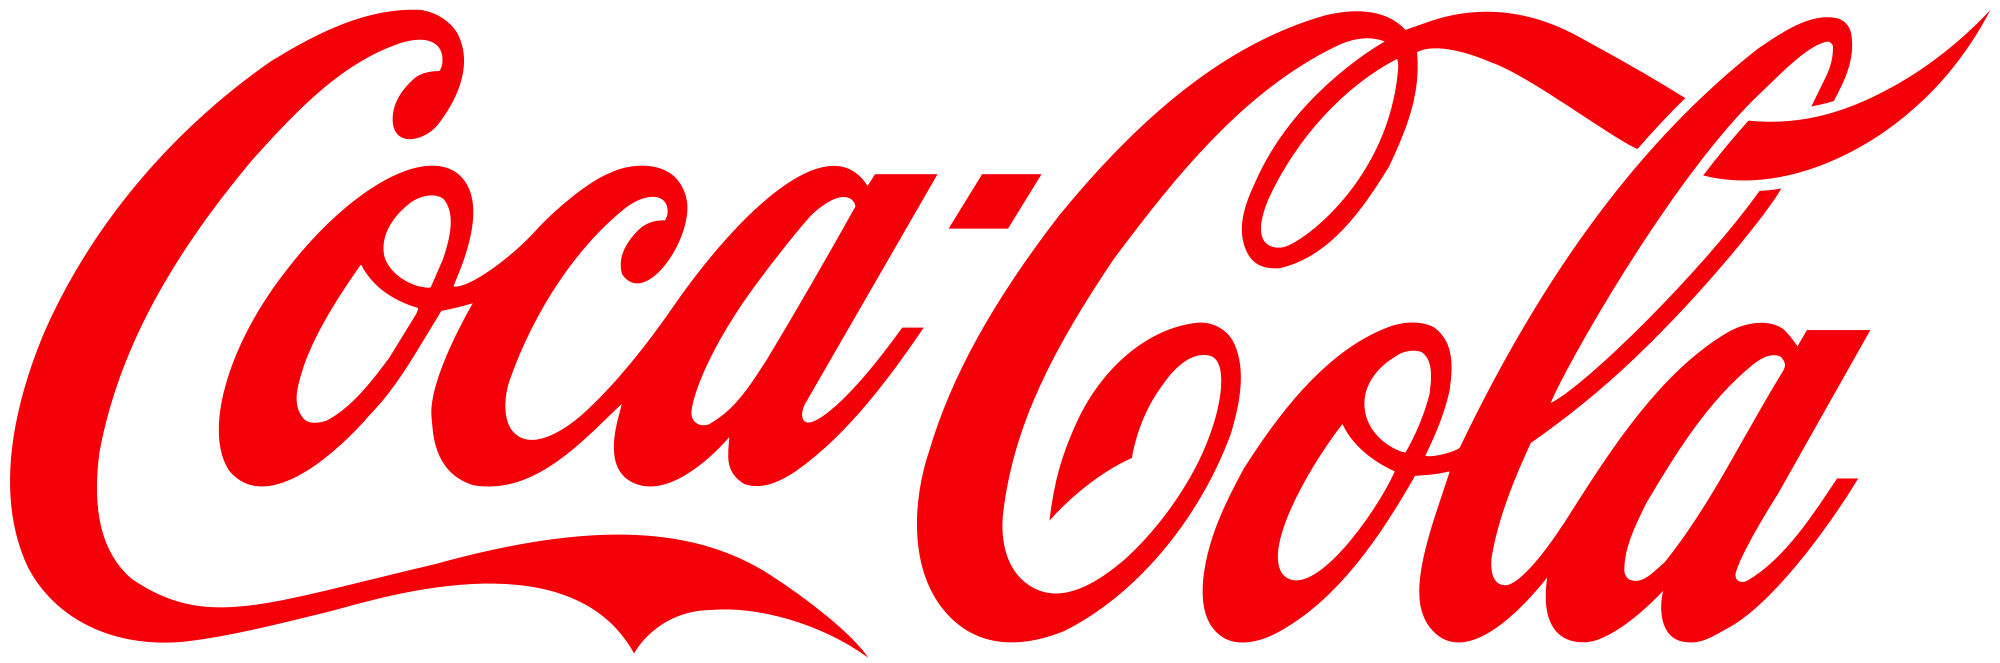 Coca Cola Script Based Logo Design